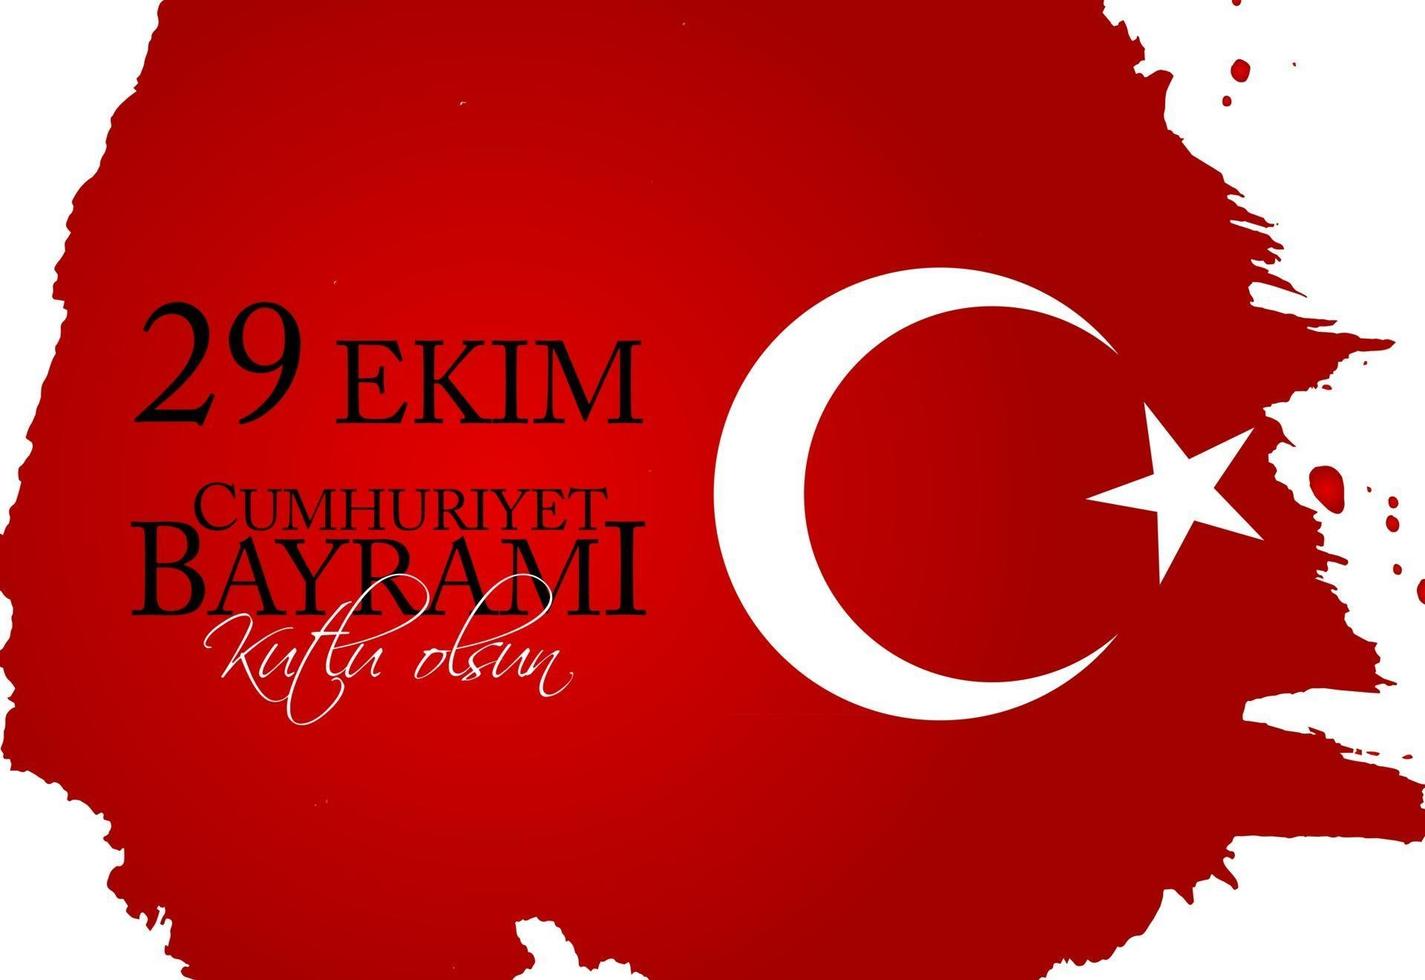 29 ekim cumhuriyet bayrami kutlu olsun. traduzione 29 ottobre festa della repubblica turchia e festa nazionale in turchia, buone vacanze vettore